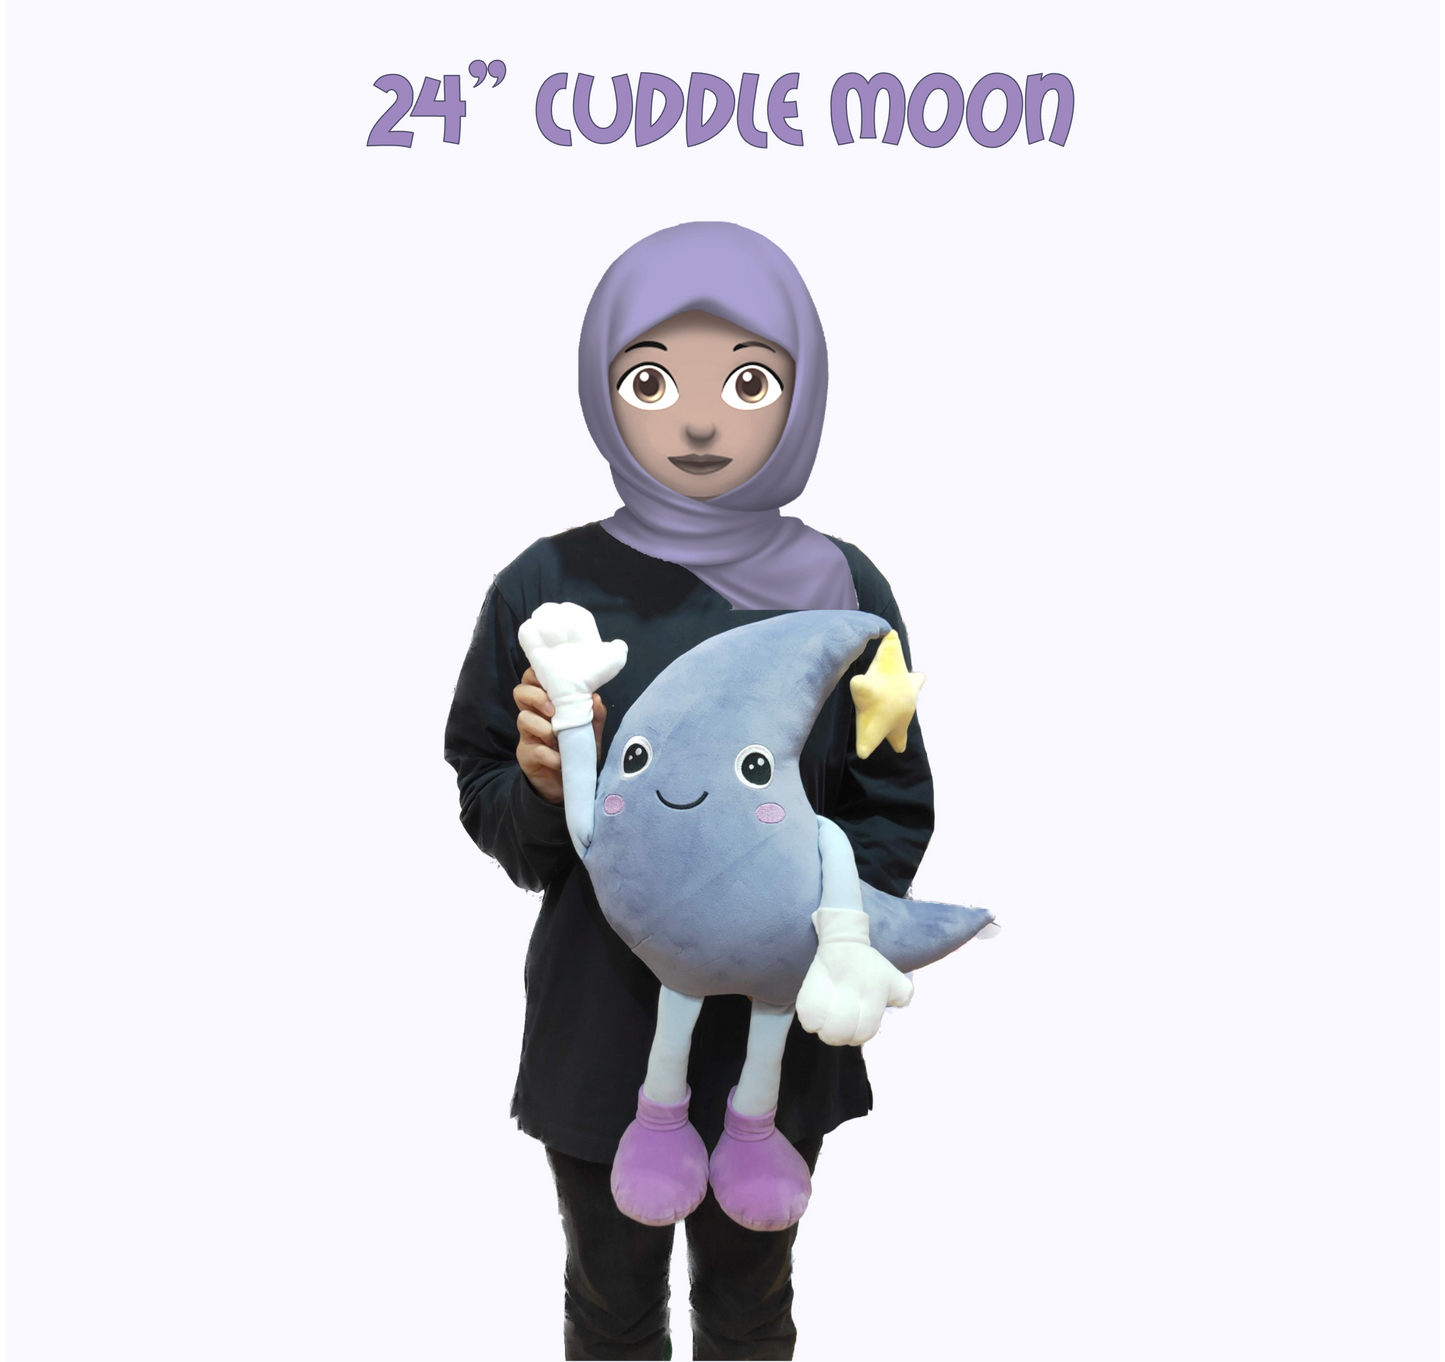 24" Cuddle Moon Plush